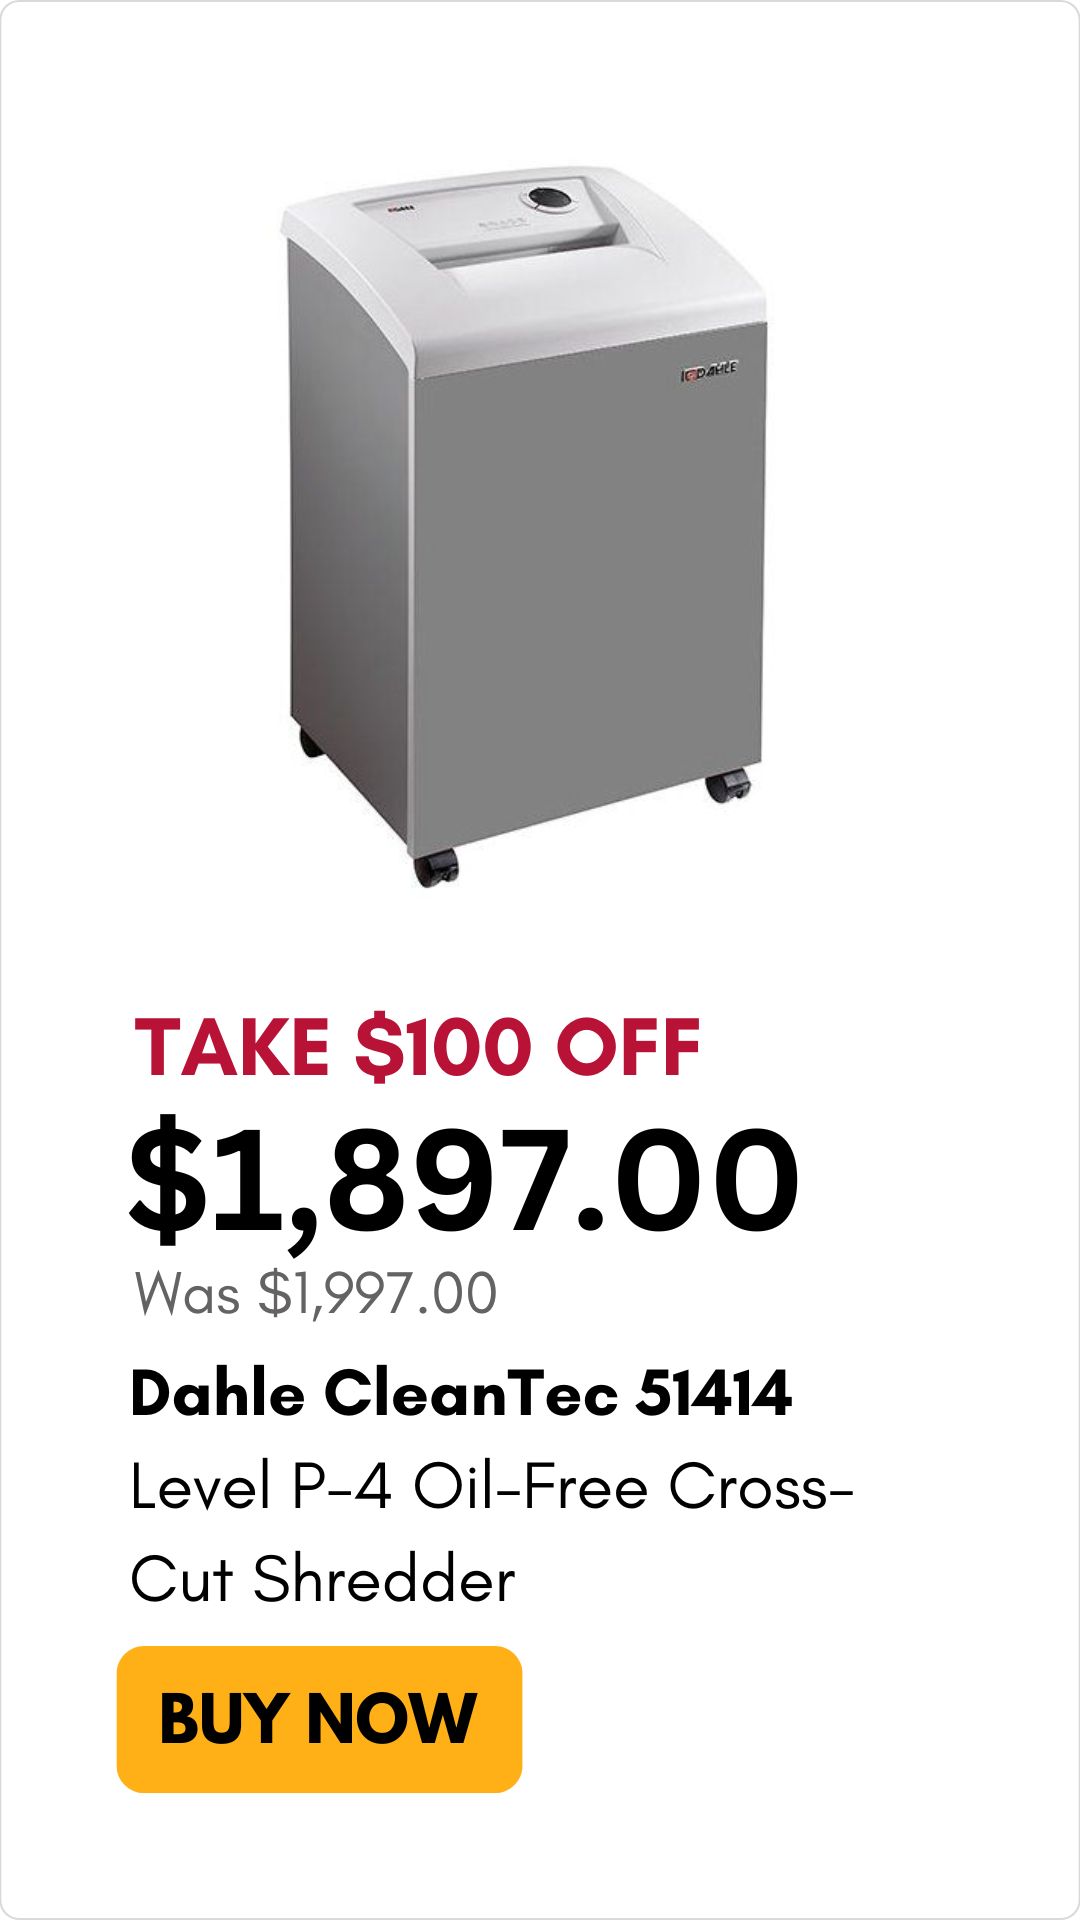 Dahle CleanTec 51414 Level P-4 Oil-Free Cross-Cut Shredder on sale for $100 off on MyBinding.com